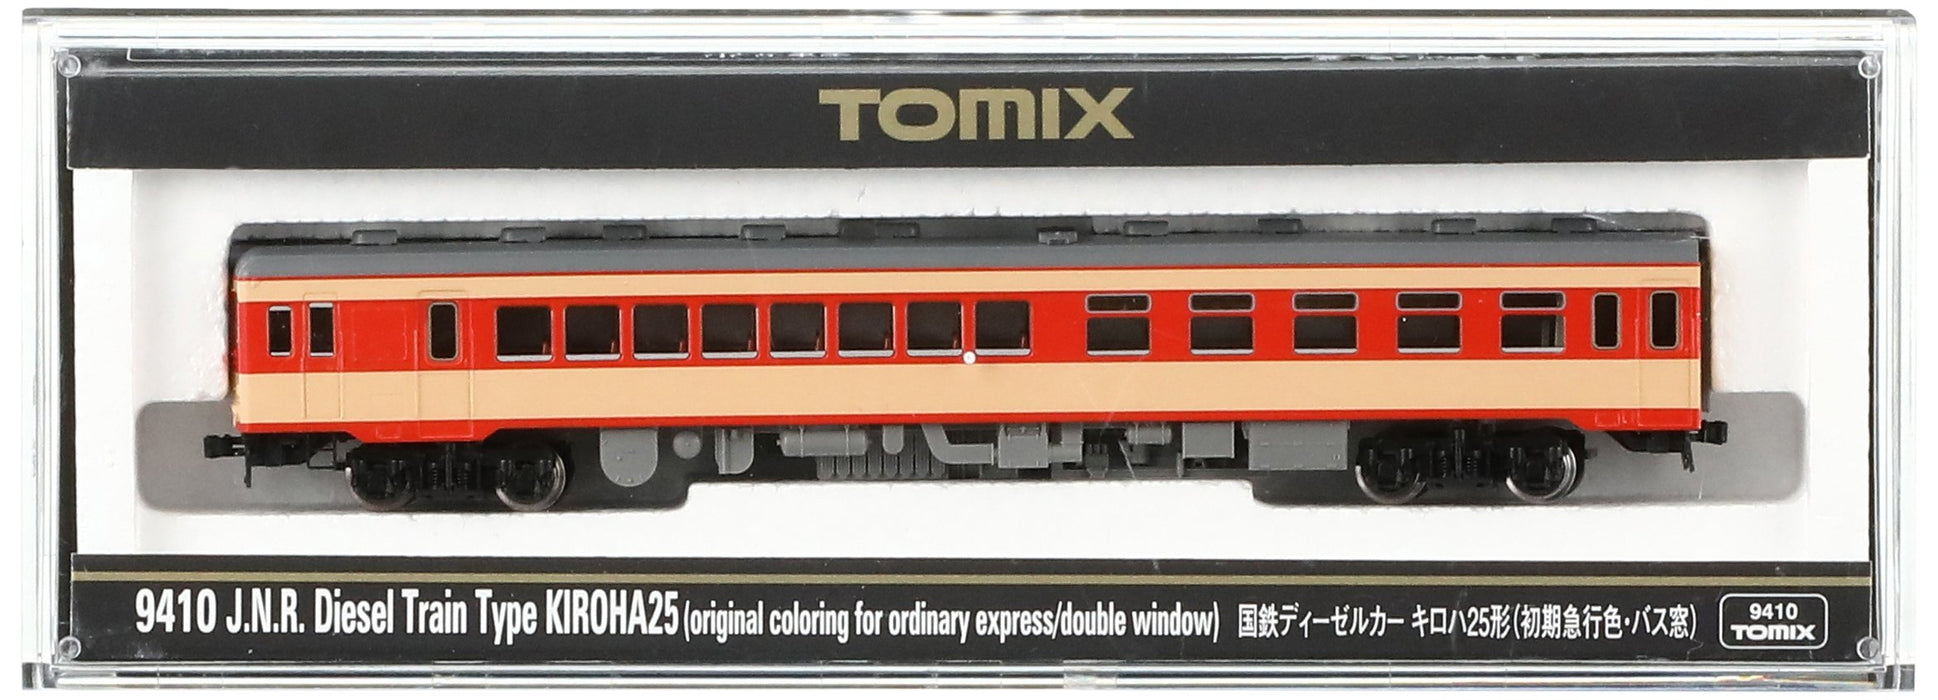 Tomytec Tomix N Gauge Kiroha 25 Early Express Railway Model Voiture diesel 9410